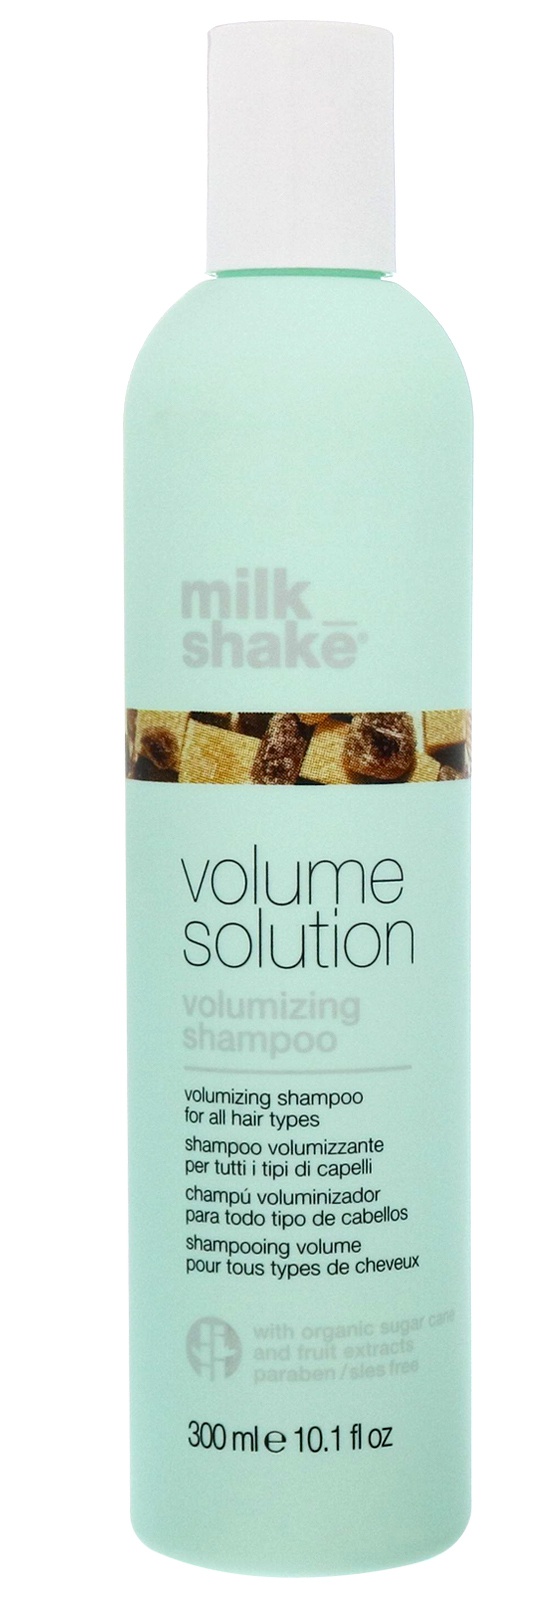 Milk shake Volume